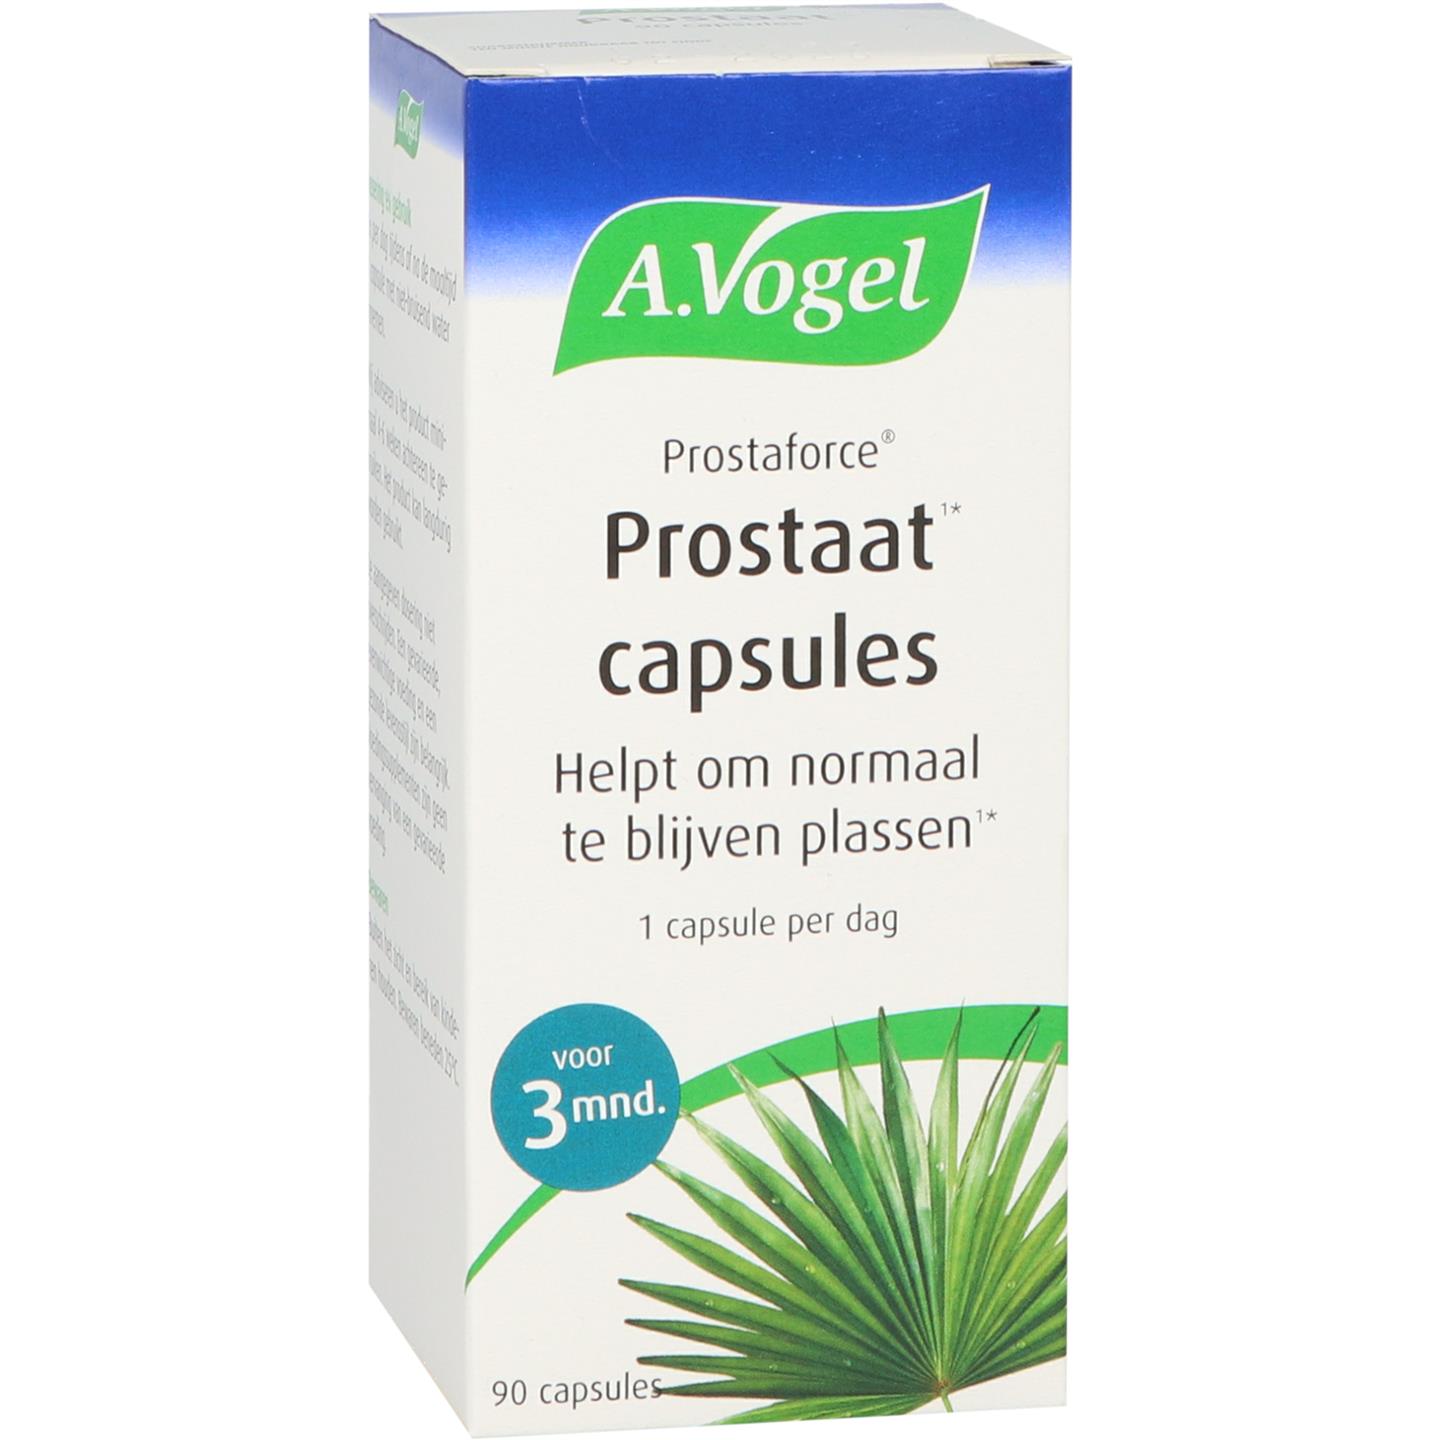 Prostaat capsules (Prostaforce)